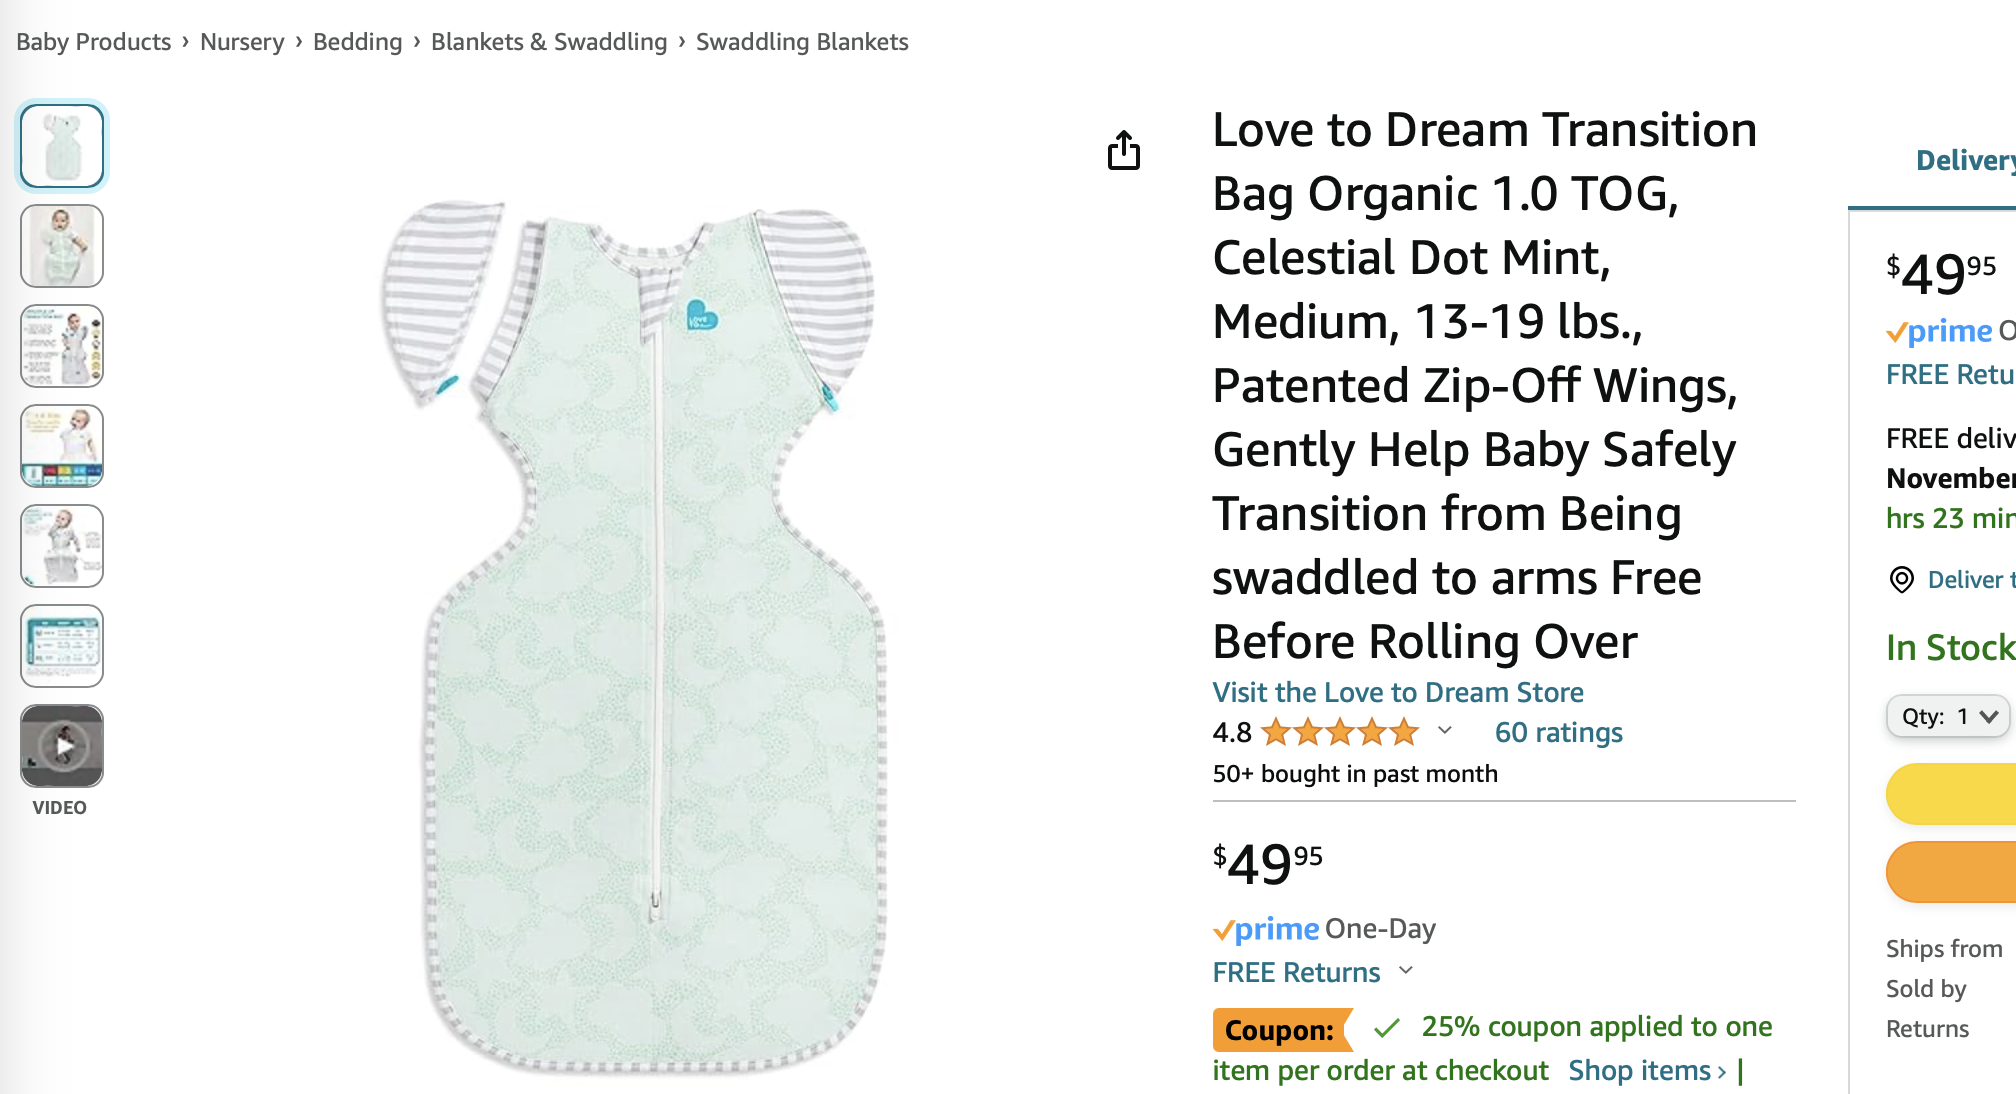 Amazon.com: Love to Dream Transition Bag Organic 1.0 TOG, Celestial Dot Mint宝宝睡袋促销 后悔没早点用，睡渣宝宝变睡神 7.5折